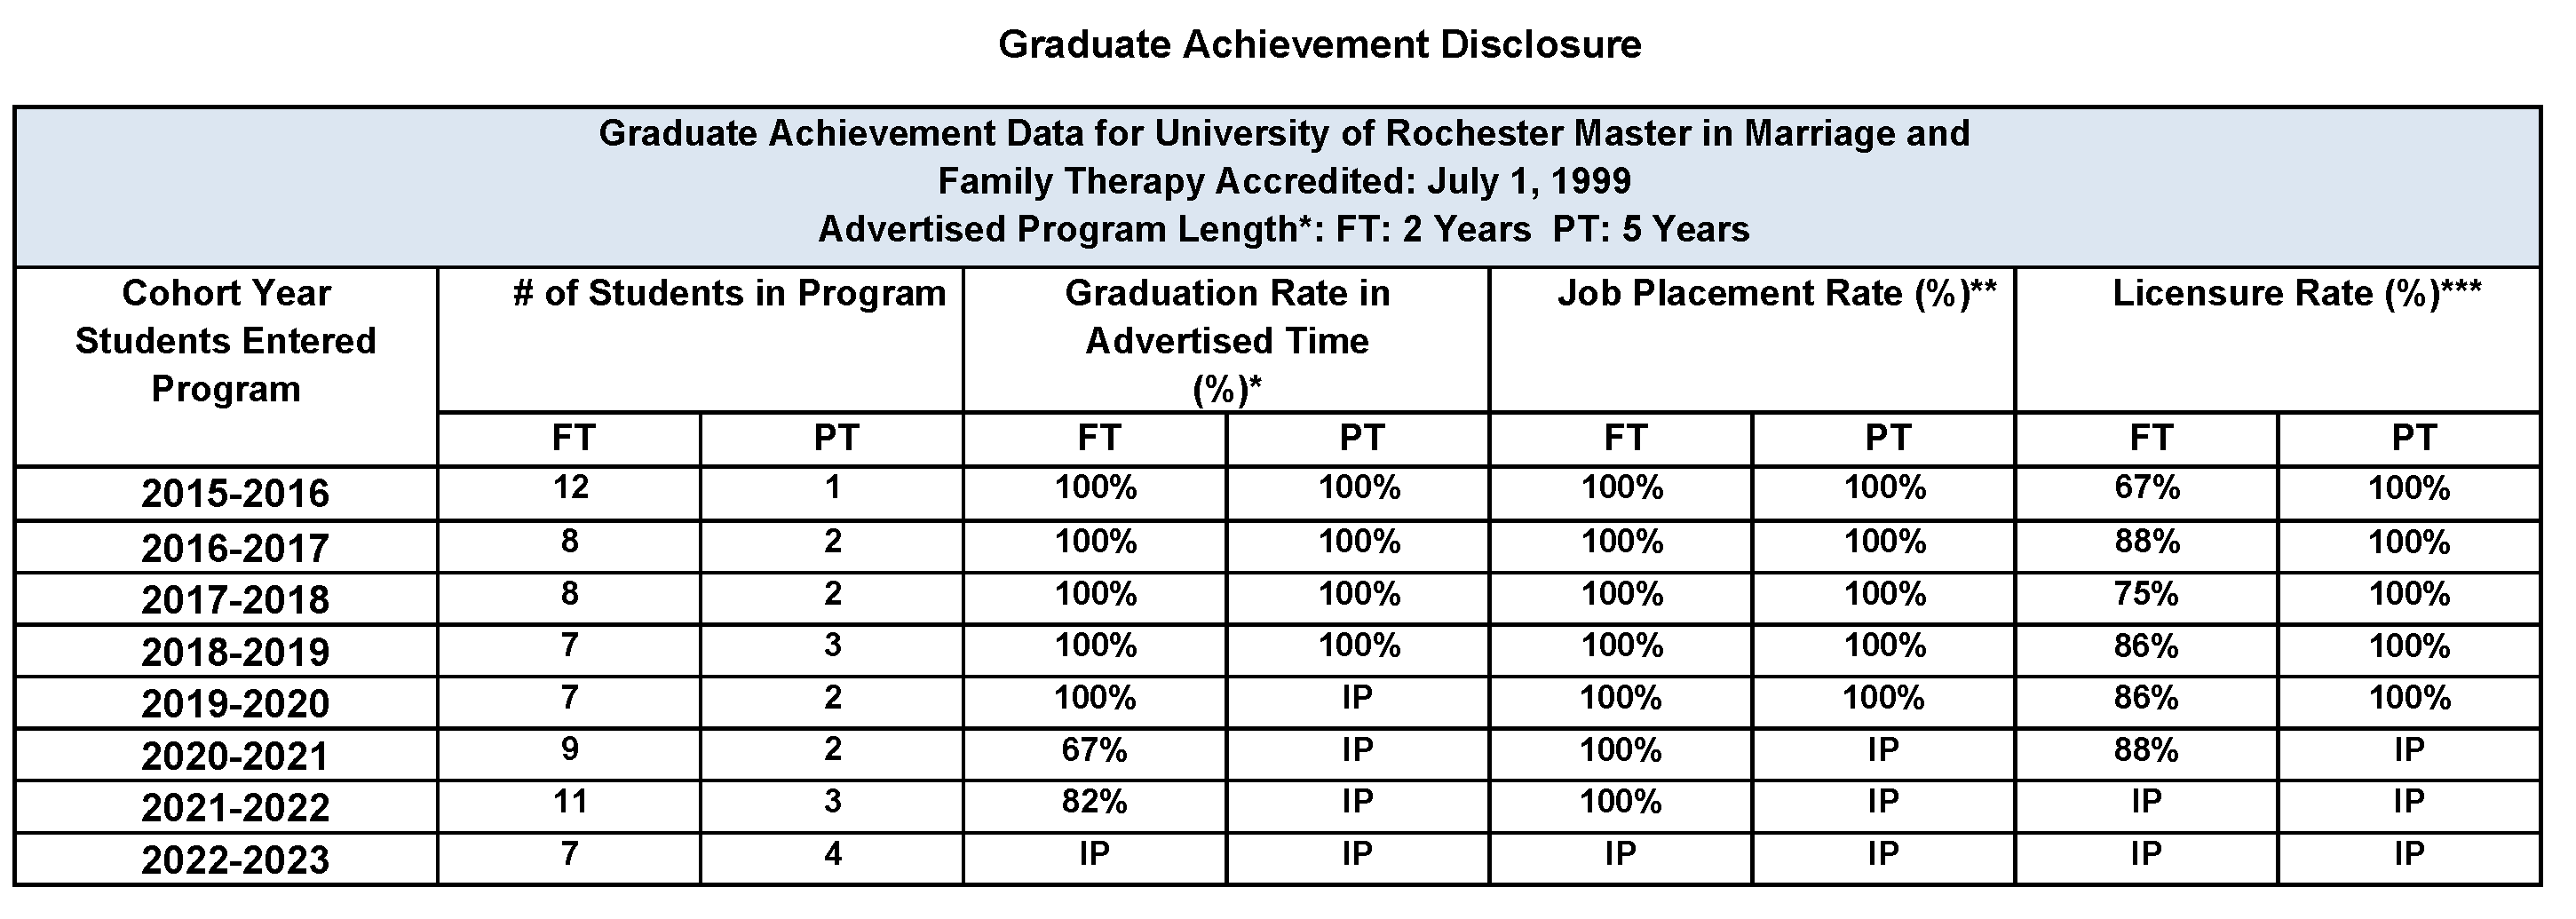 Graduate Achievement Disclosure Table of Data for 2024